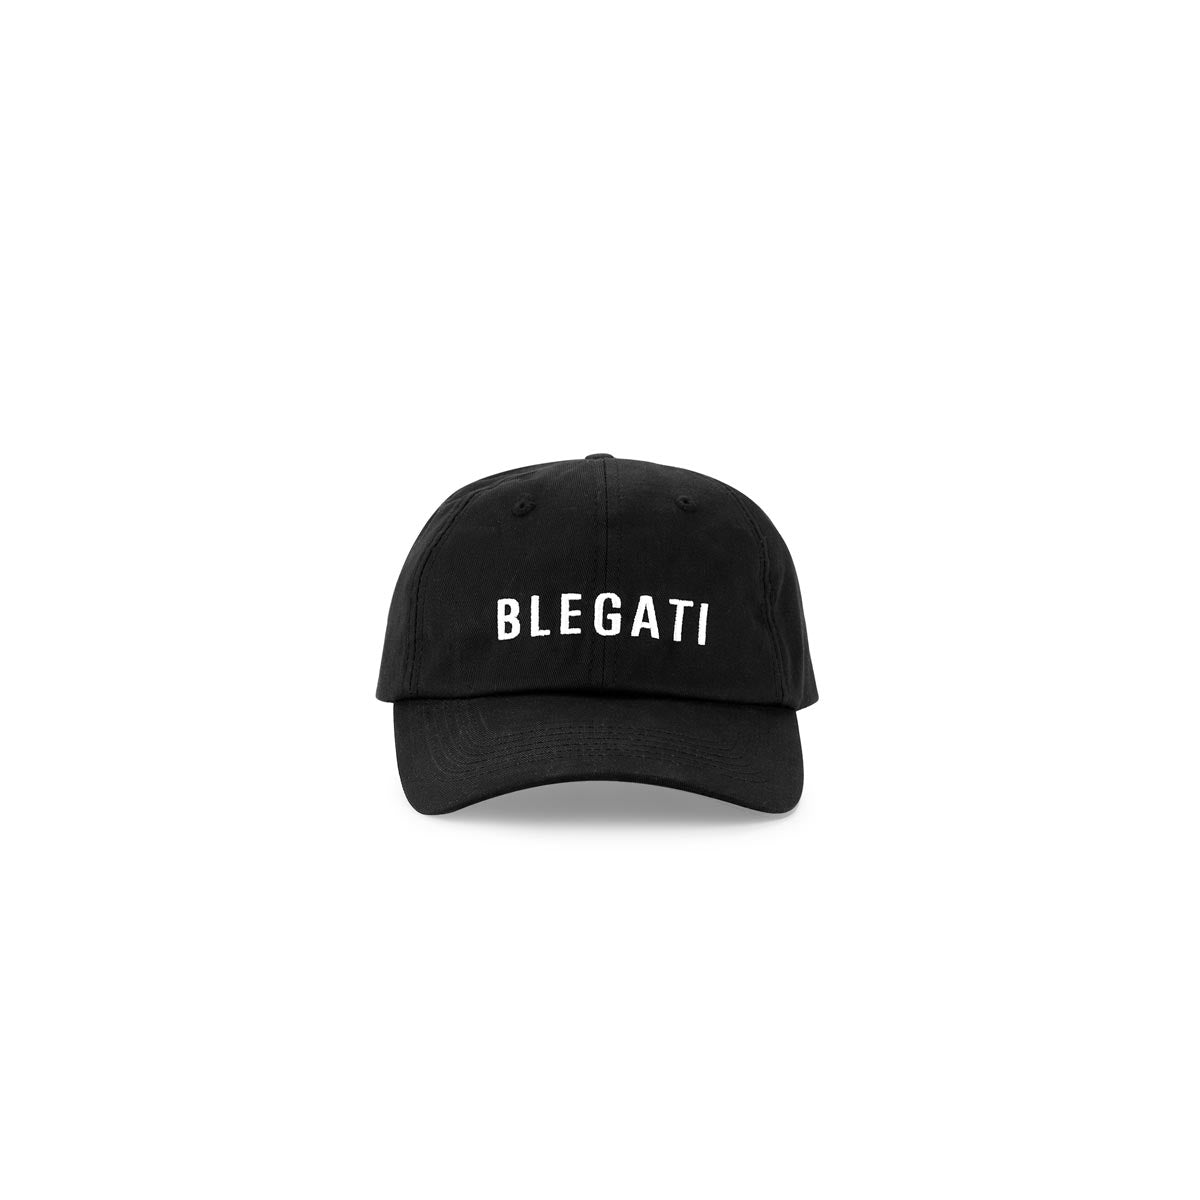 black cap, blegati logo